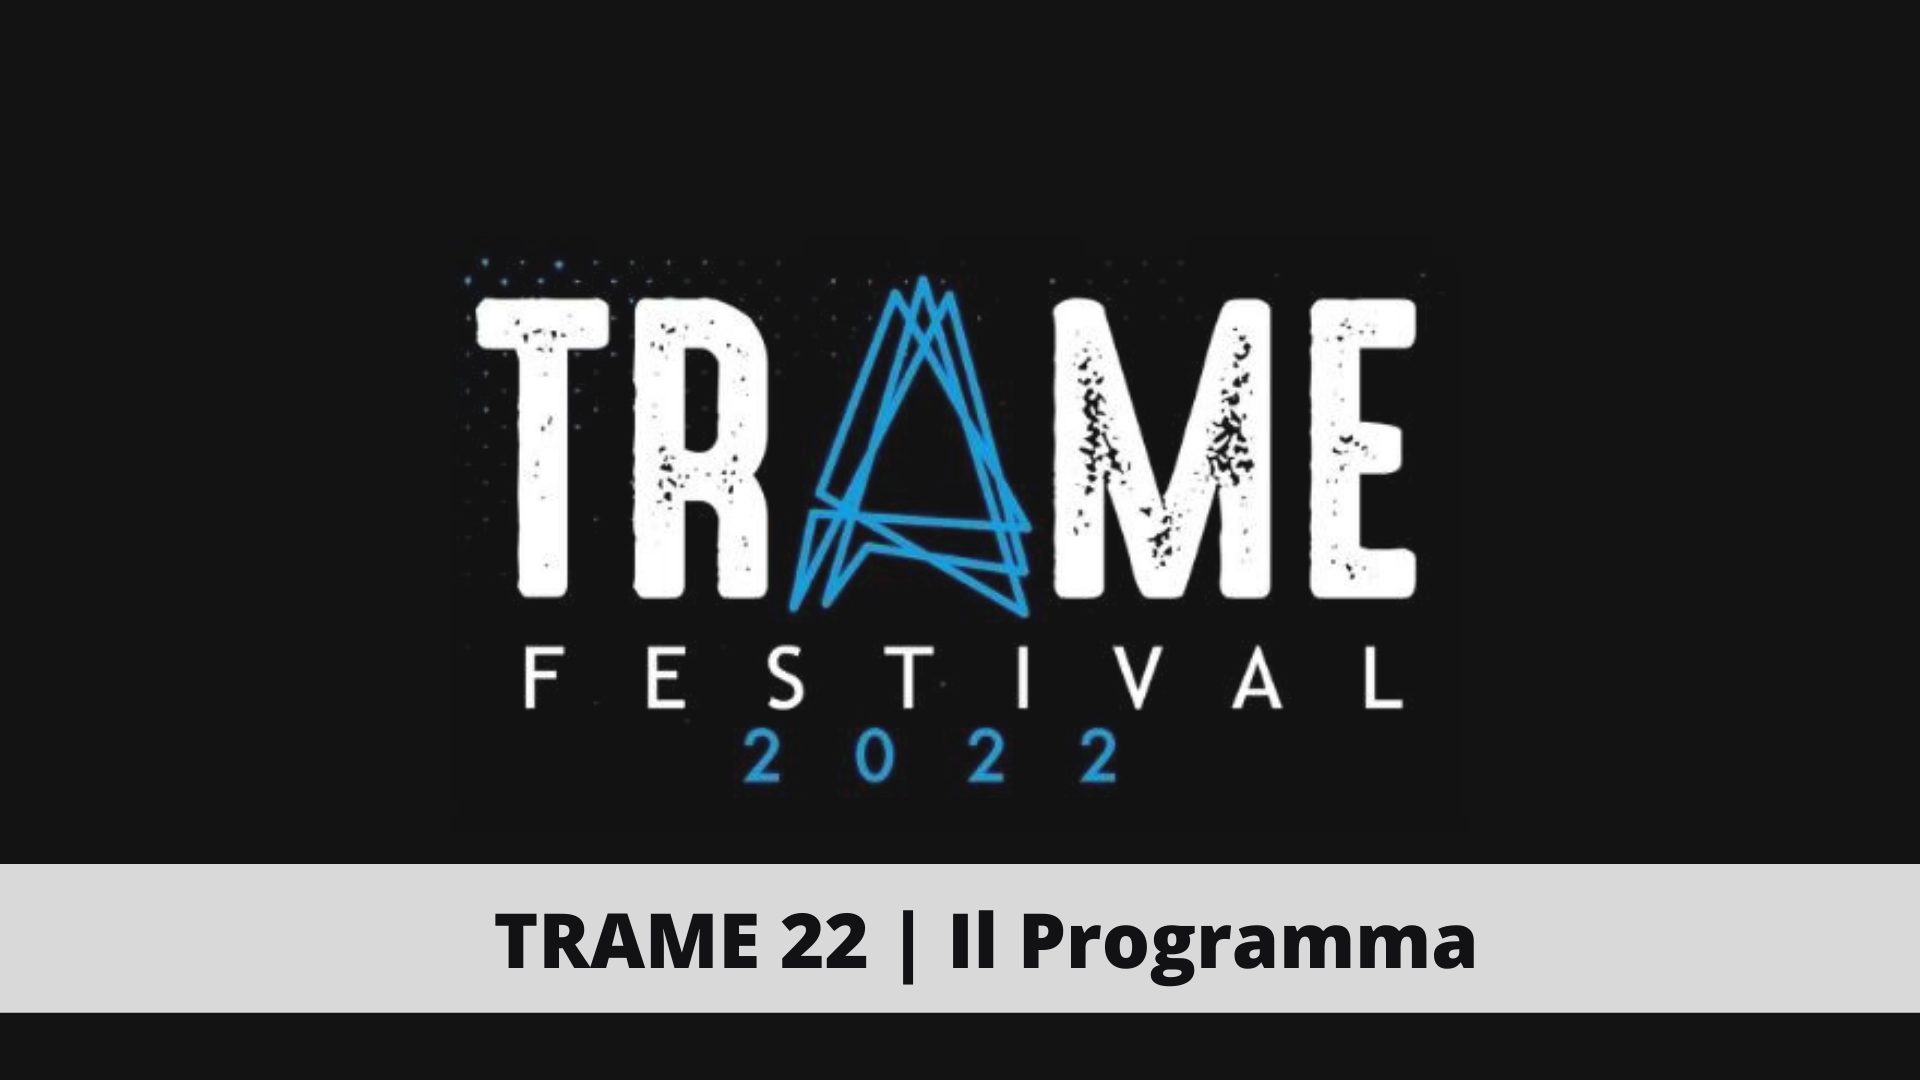 Trame Festival